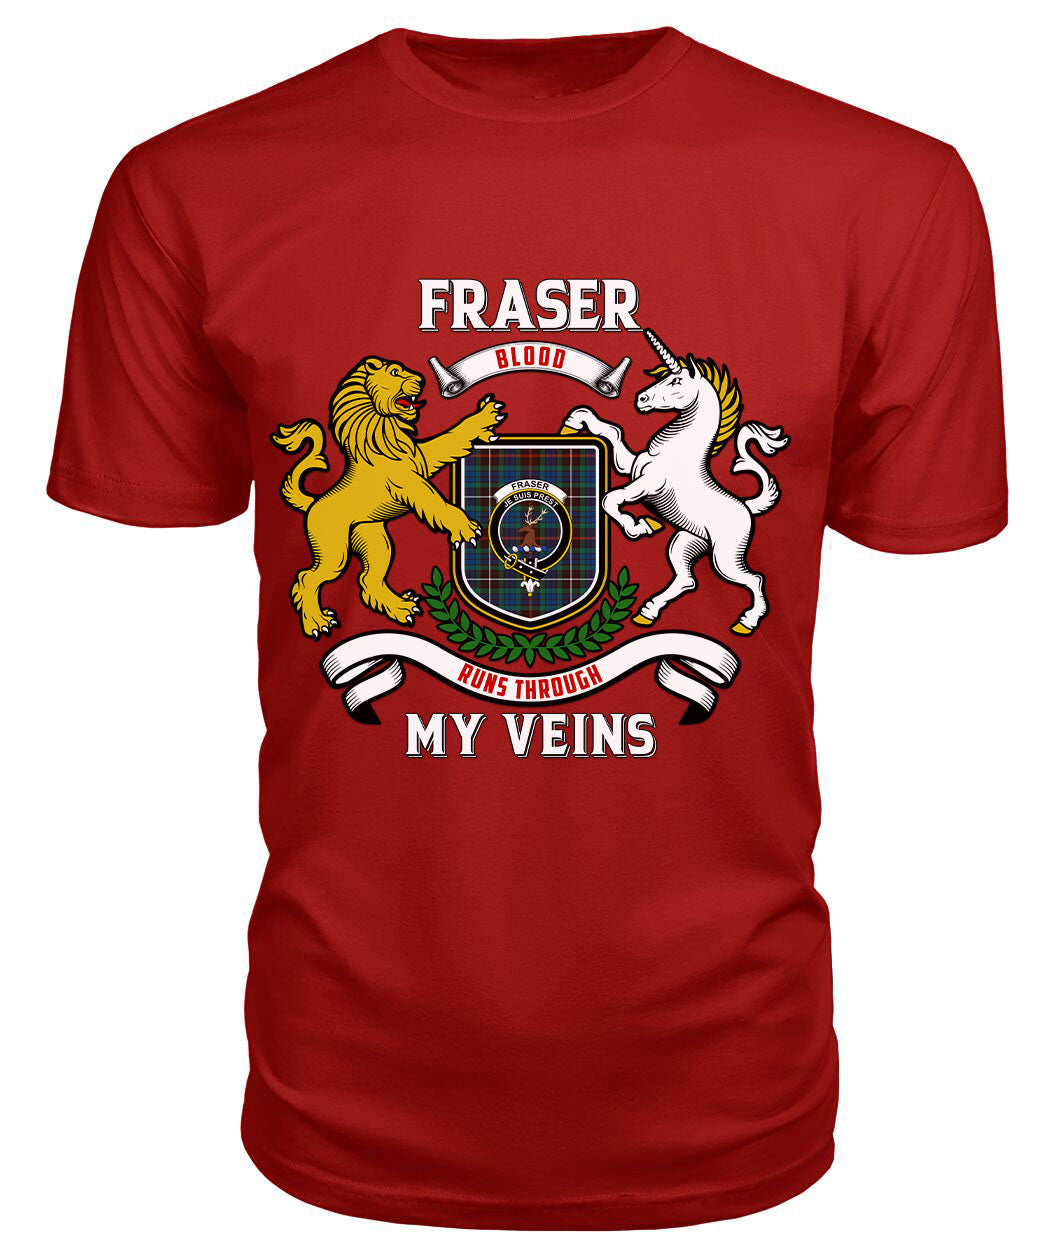 Fraser (of Lovat) Hunting Ancient Tartan Crest 2D T-shirt - Blood Runs Through My Veins Style